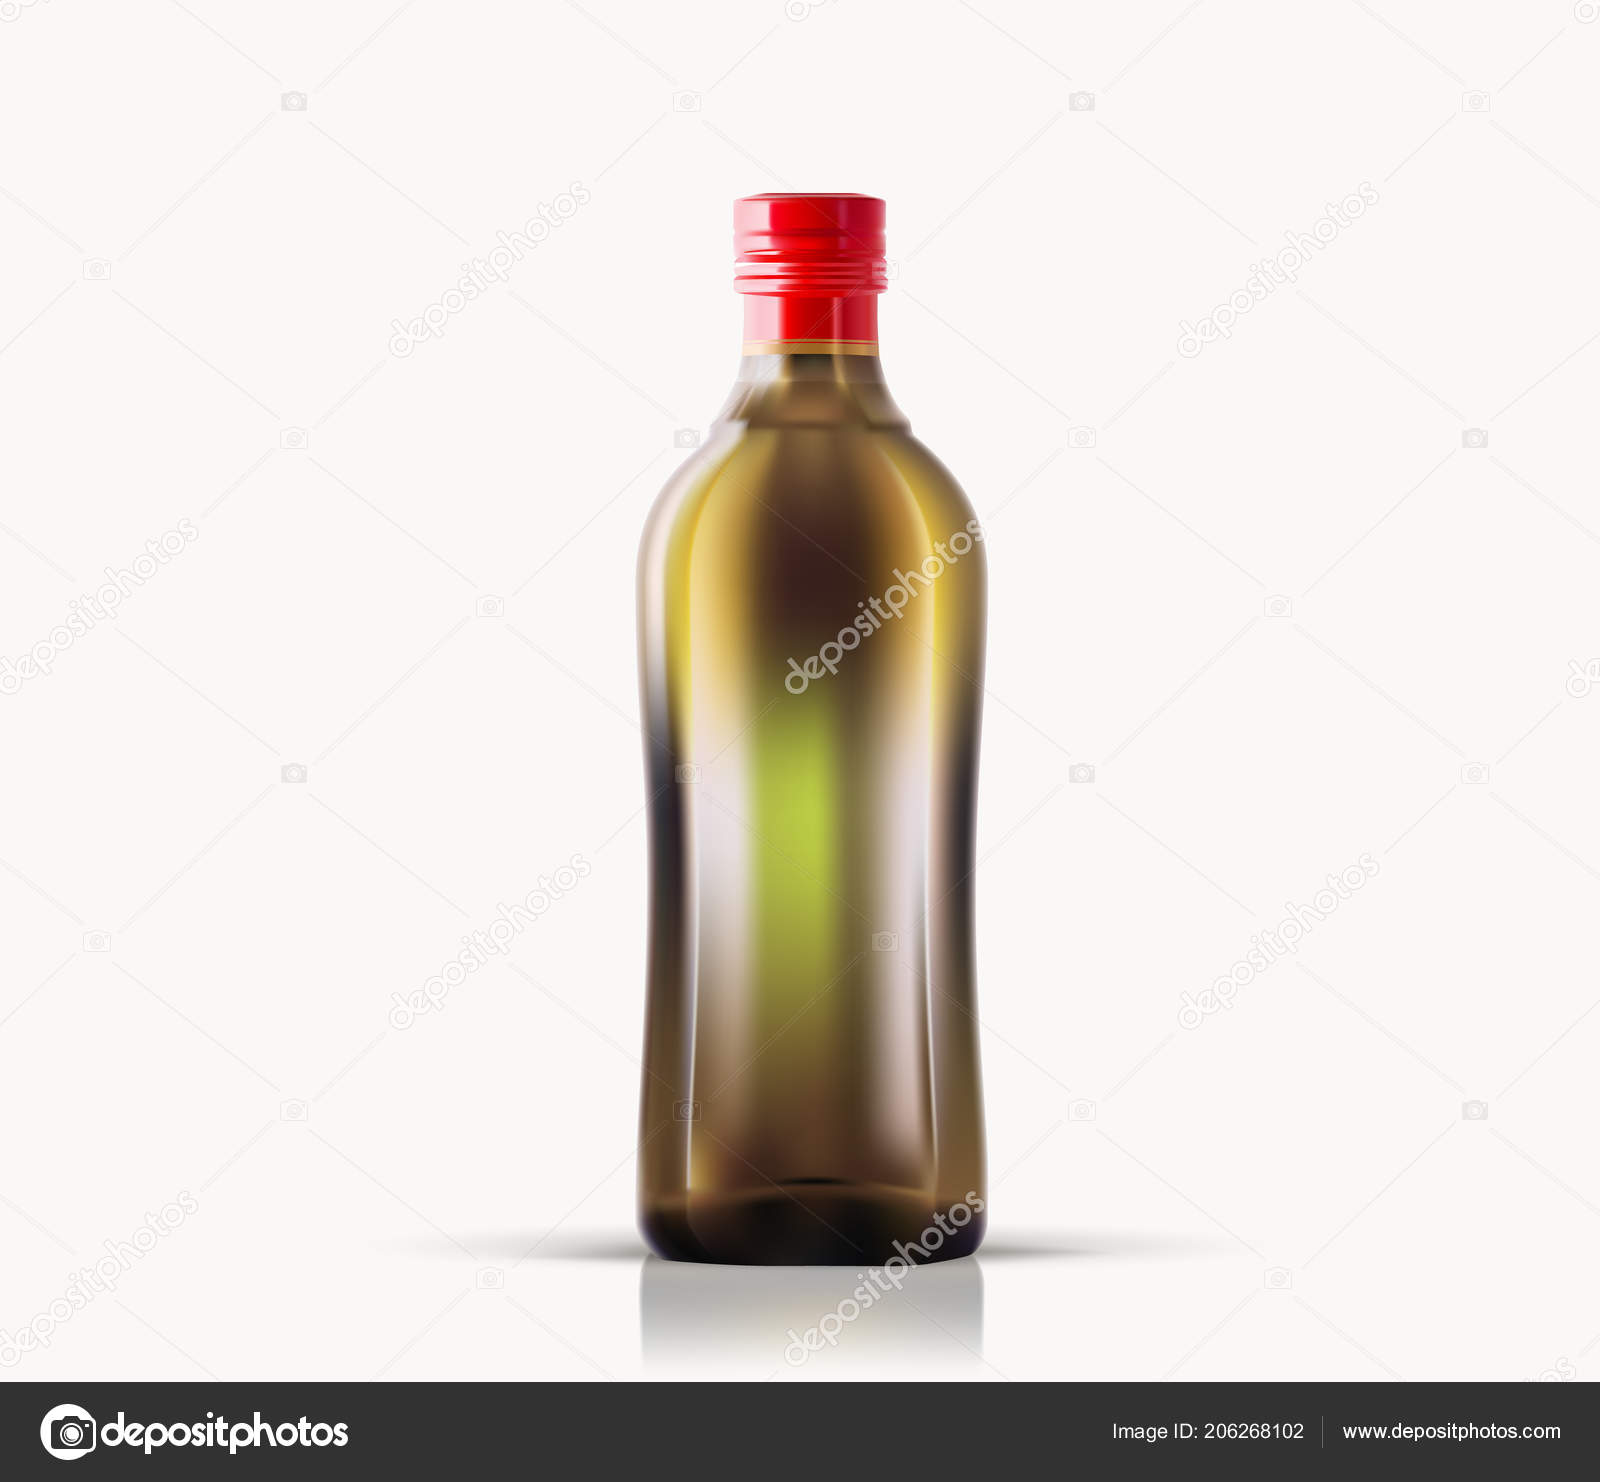 Download Virgin Olive Oil Bottle Vector Isolated On White Background Glass Bottle With Olive Or Grape Seed Virgin Oil Mock Up For Design Presentation Ads Vegetable Oil Bottle With A Stopper Vector